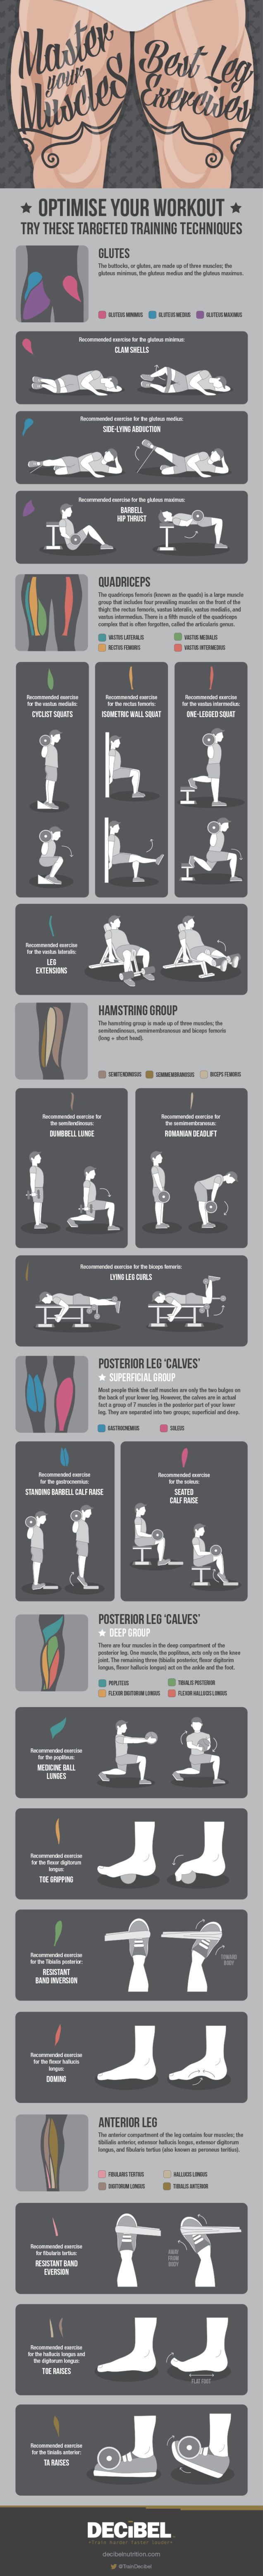 leg-exercise-infographic